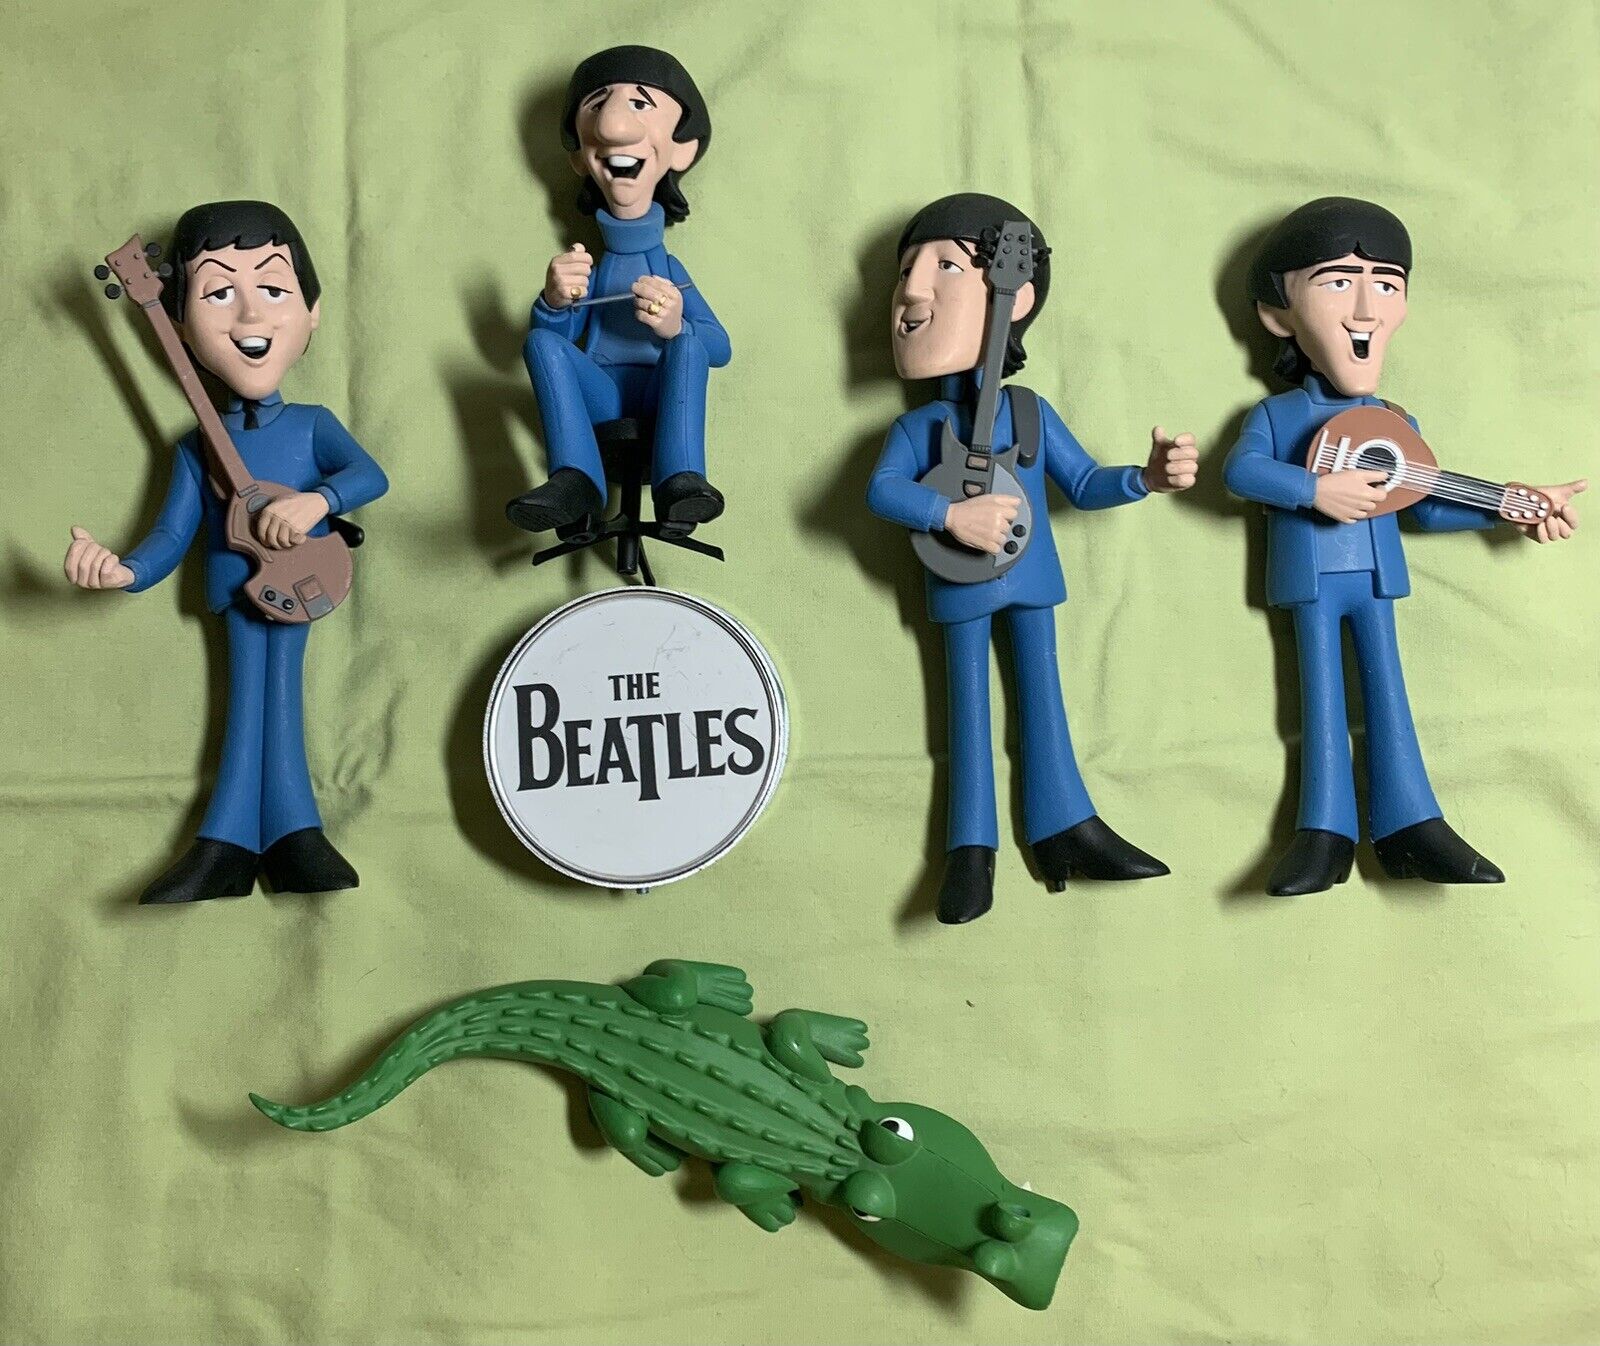 2004 McFarlane Toys The Beatles Saturday Morning Cartoon Series Animated Figures